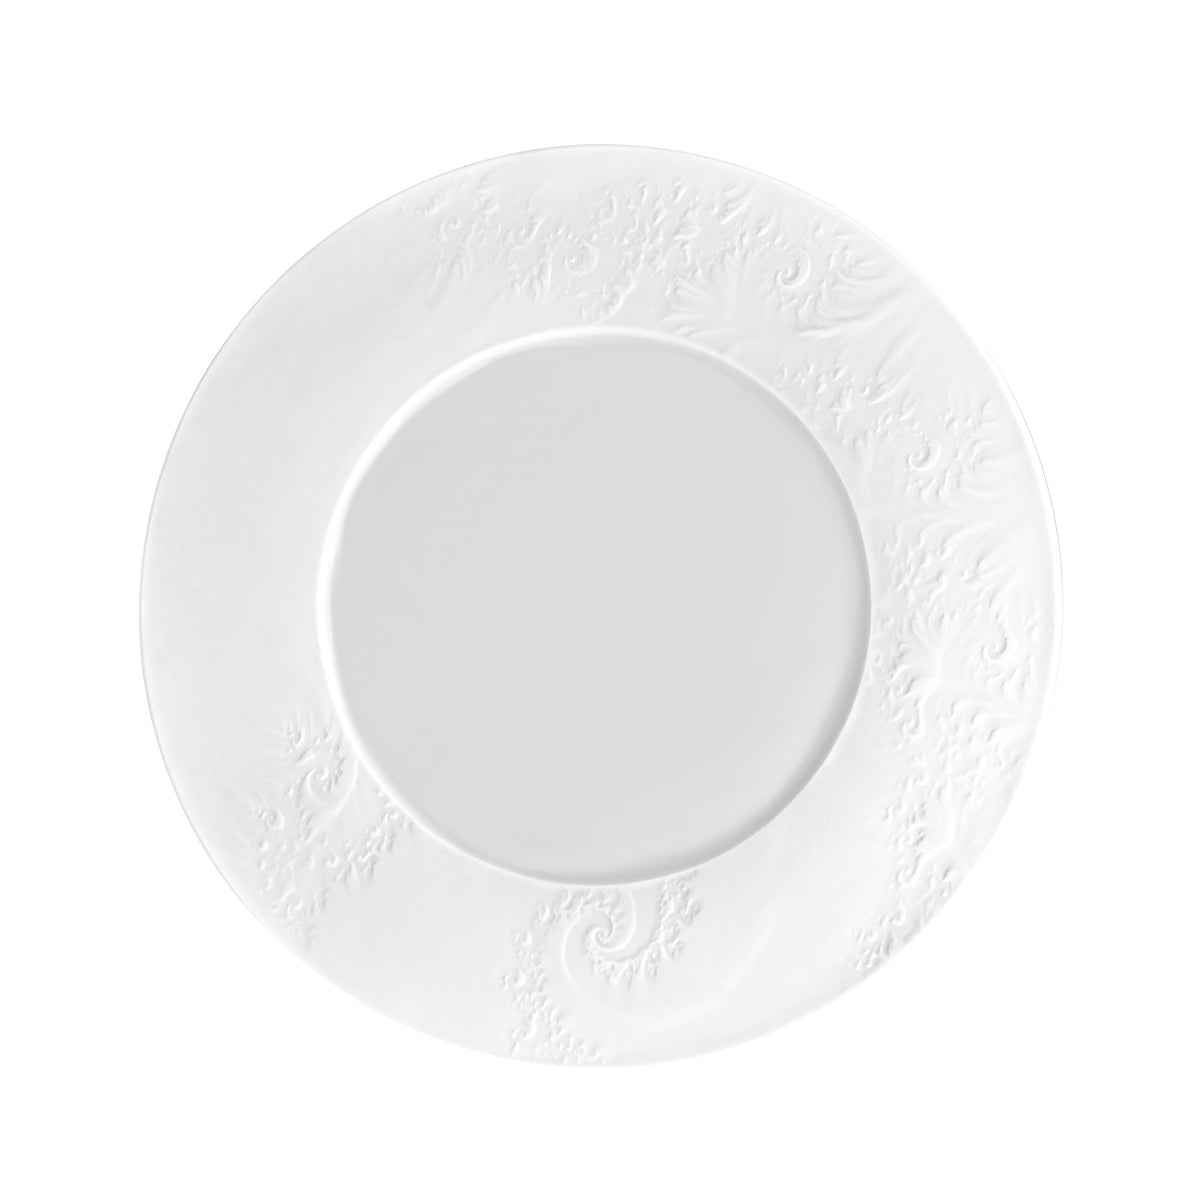 TURBULENCE - Dinner plate